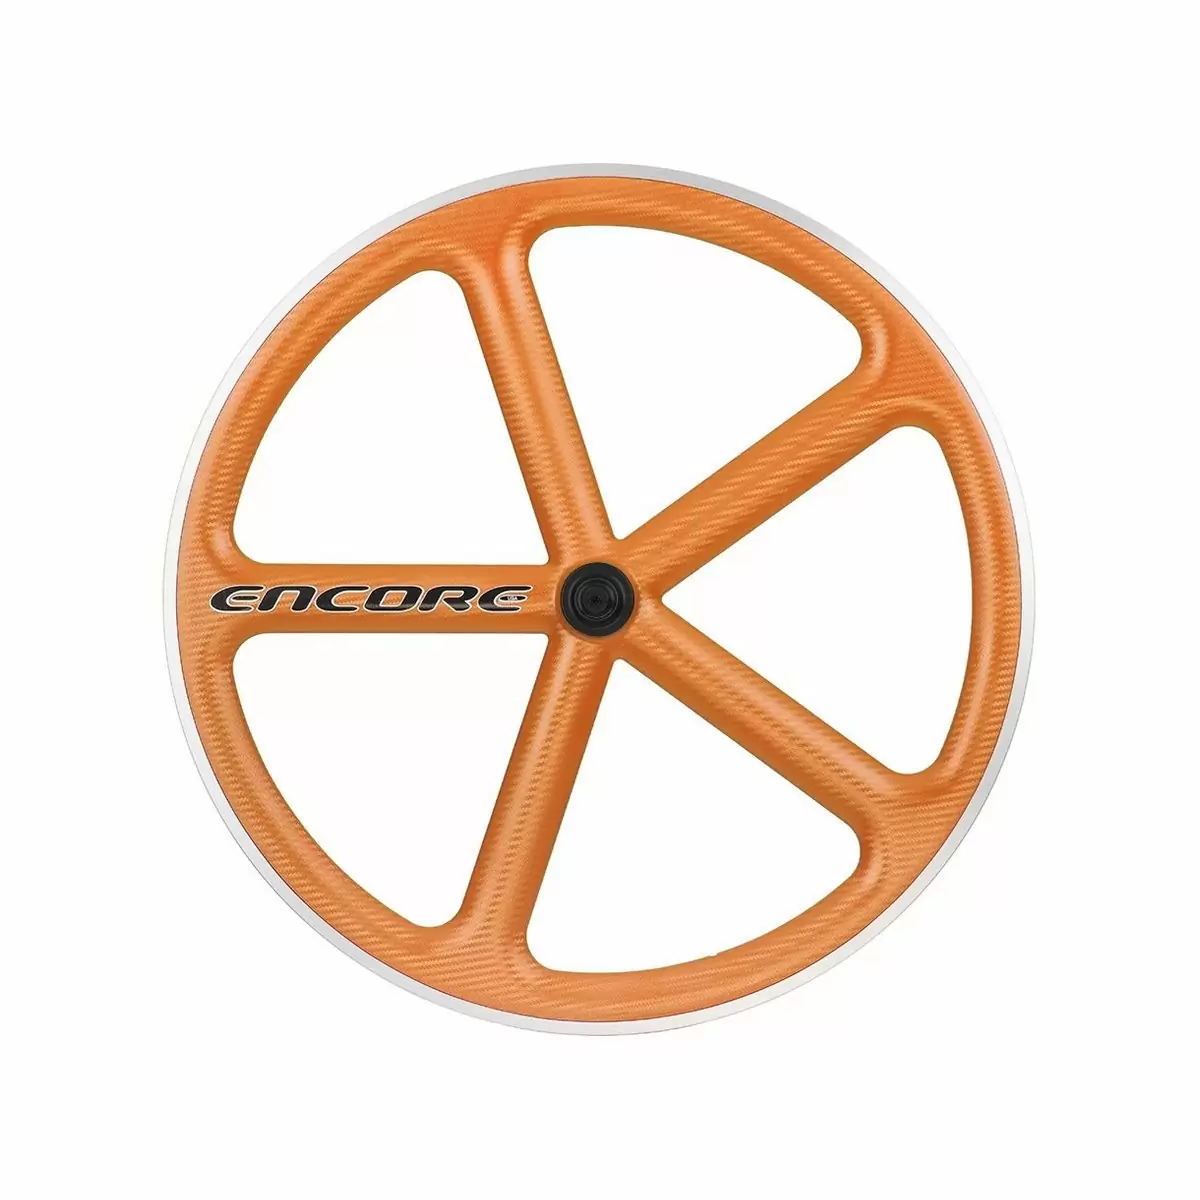 roue avant 700c track 5 rayons carbone tissage orange msw - image